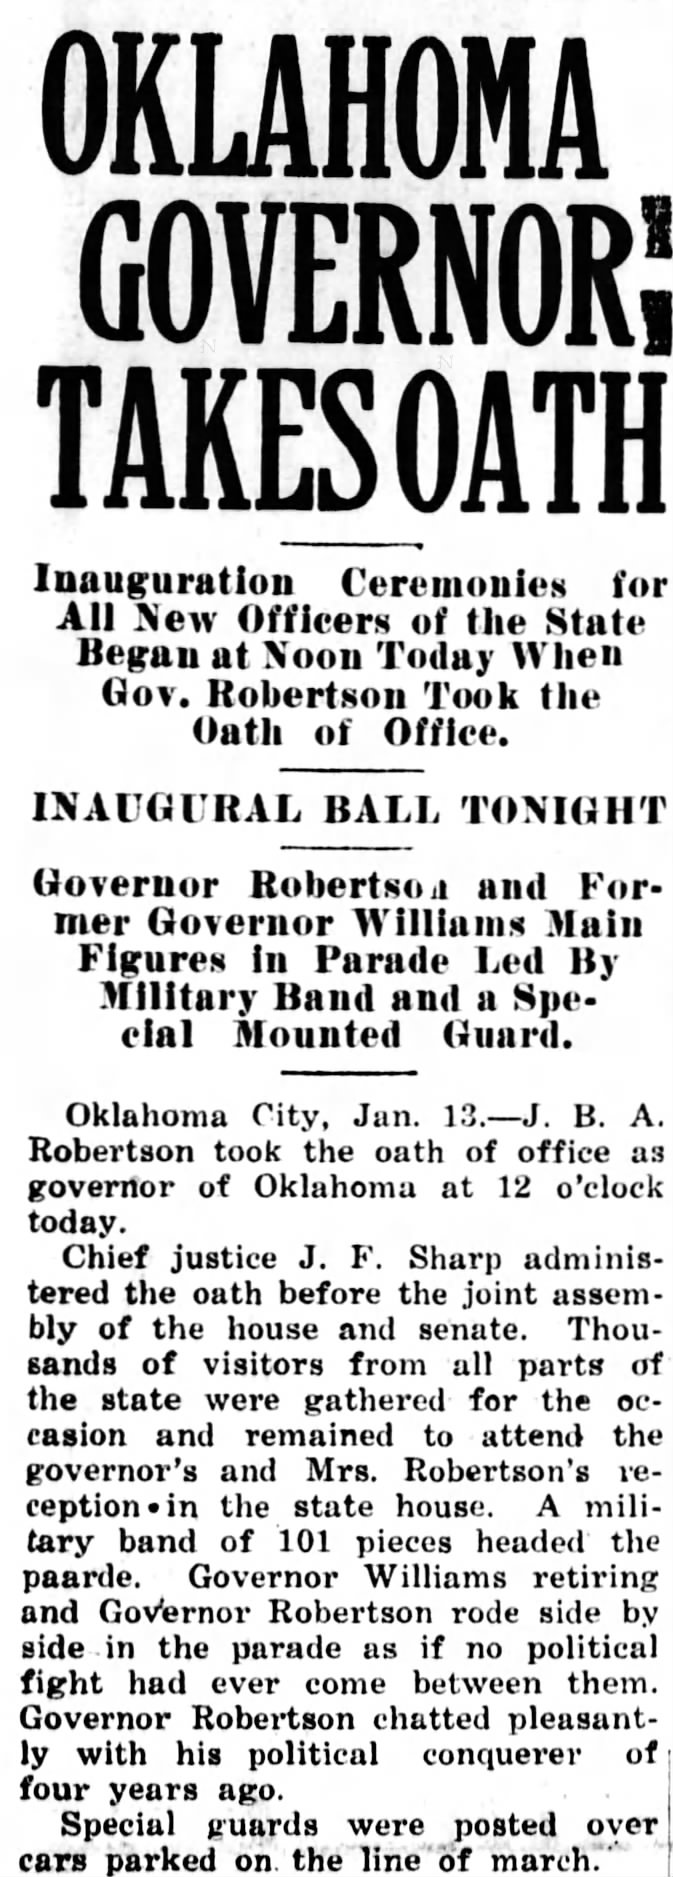 Oklahoma Governor Takes Oath